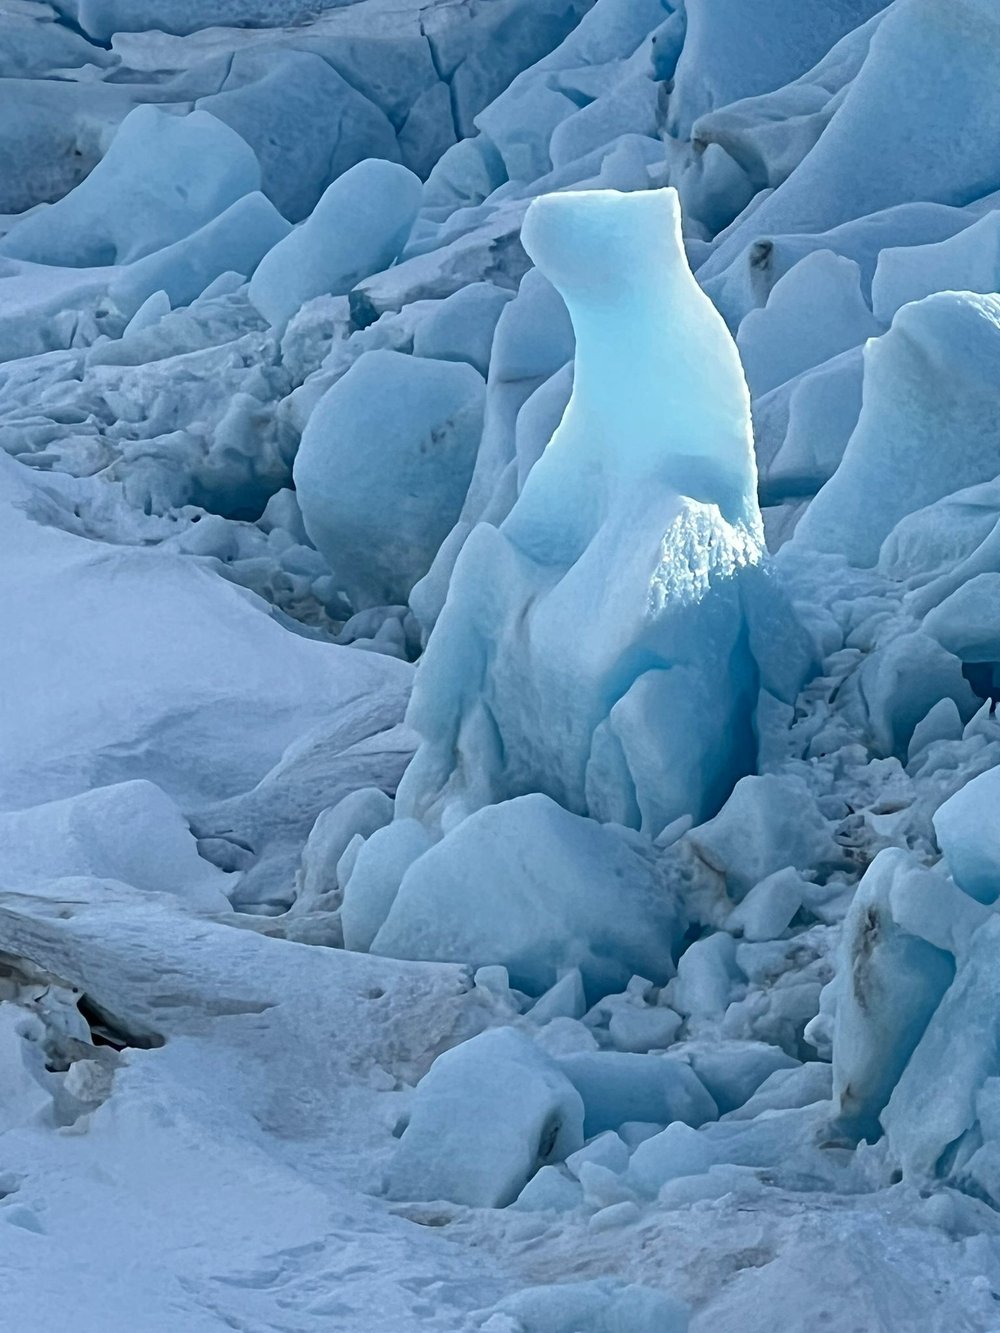  “Polarbear” sitting on the ice. ©Belén Garcia Ovide 